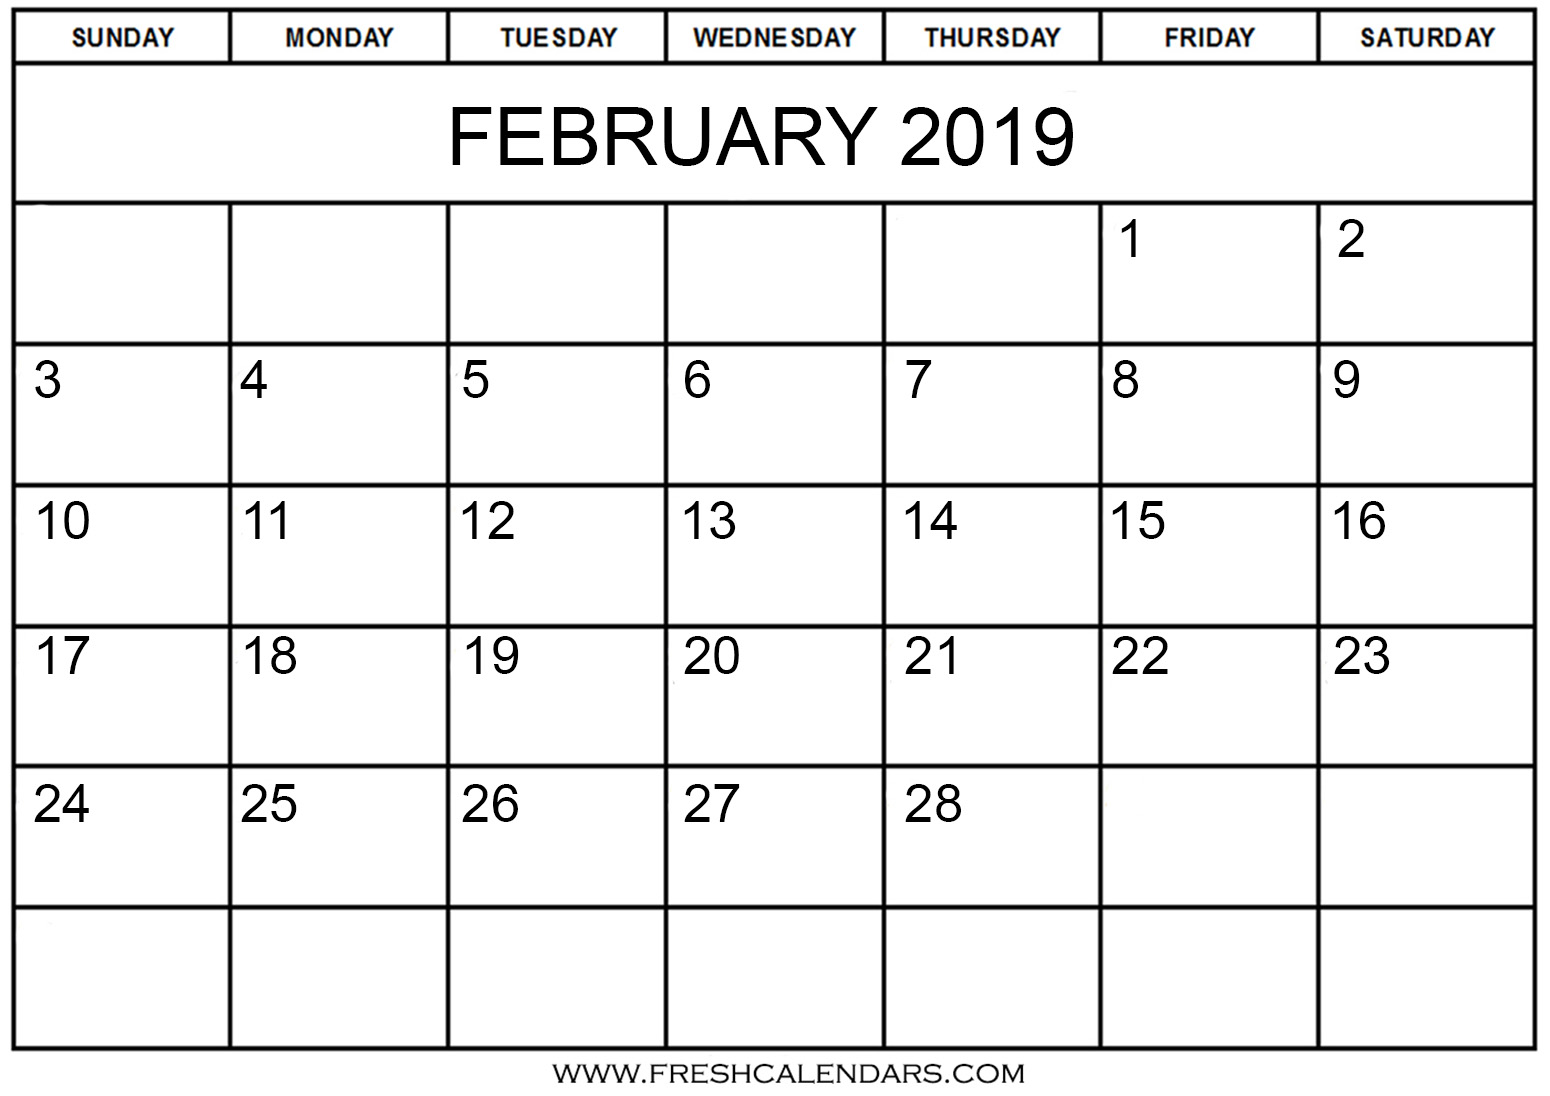 Feb 2019 Calendar Template